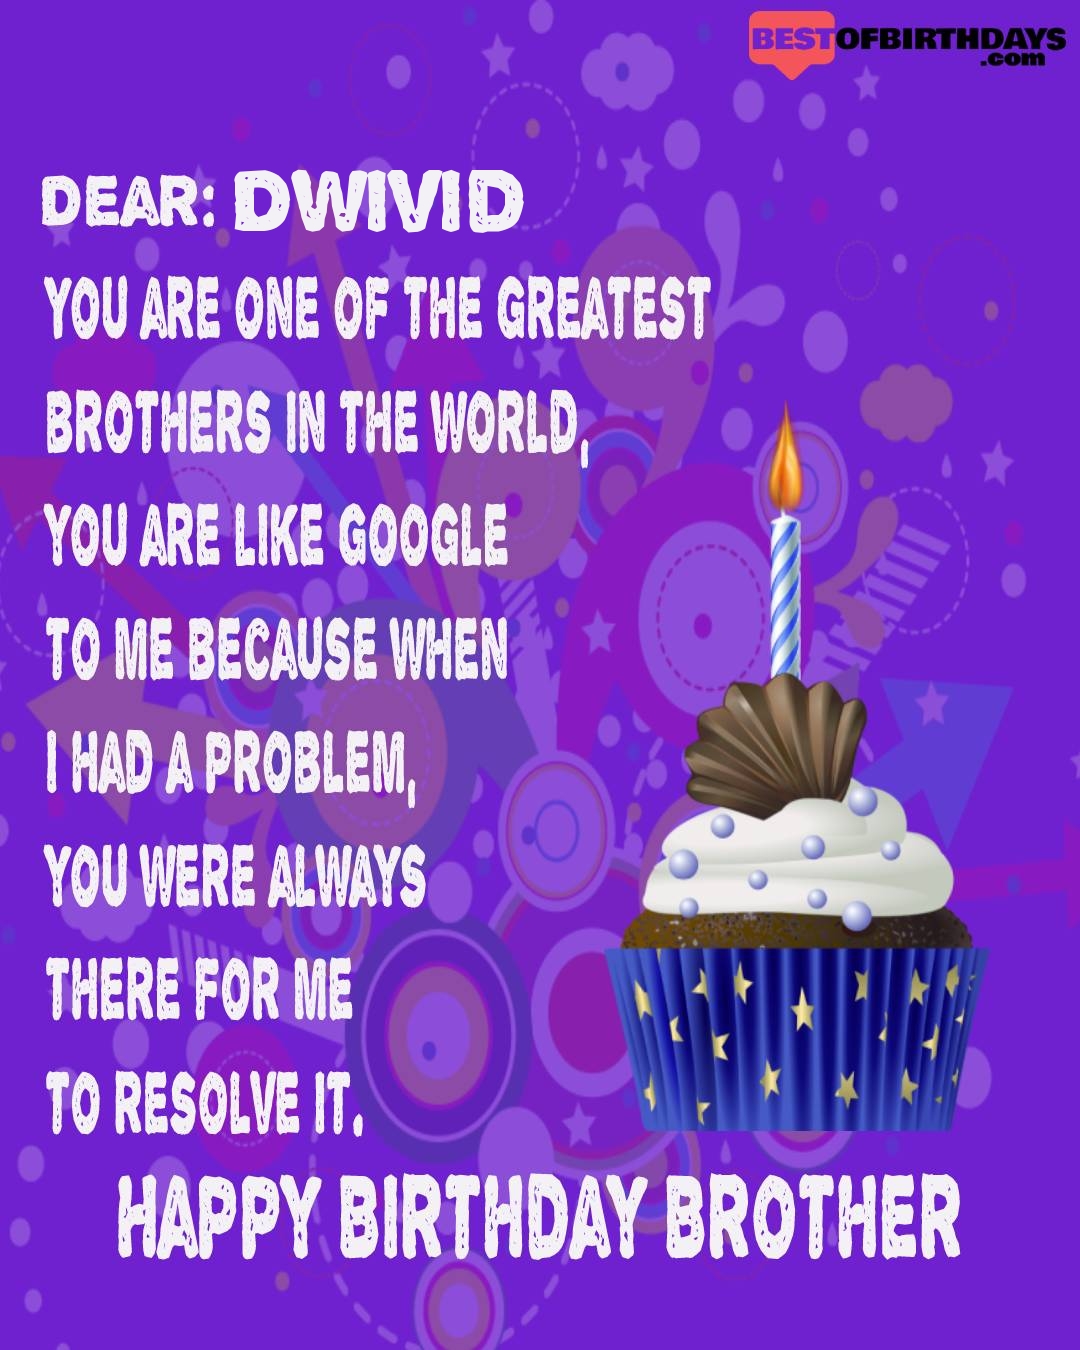 Happy birthday dwivid bhai brother bro